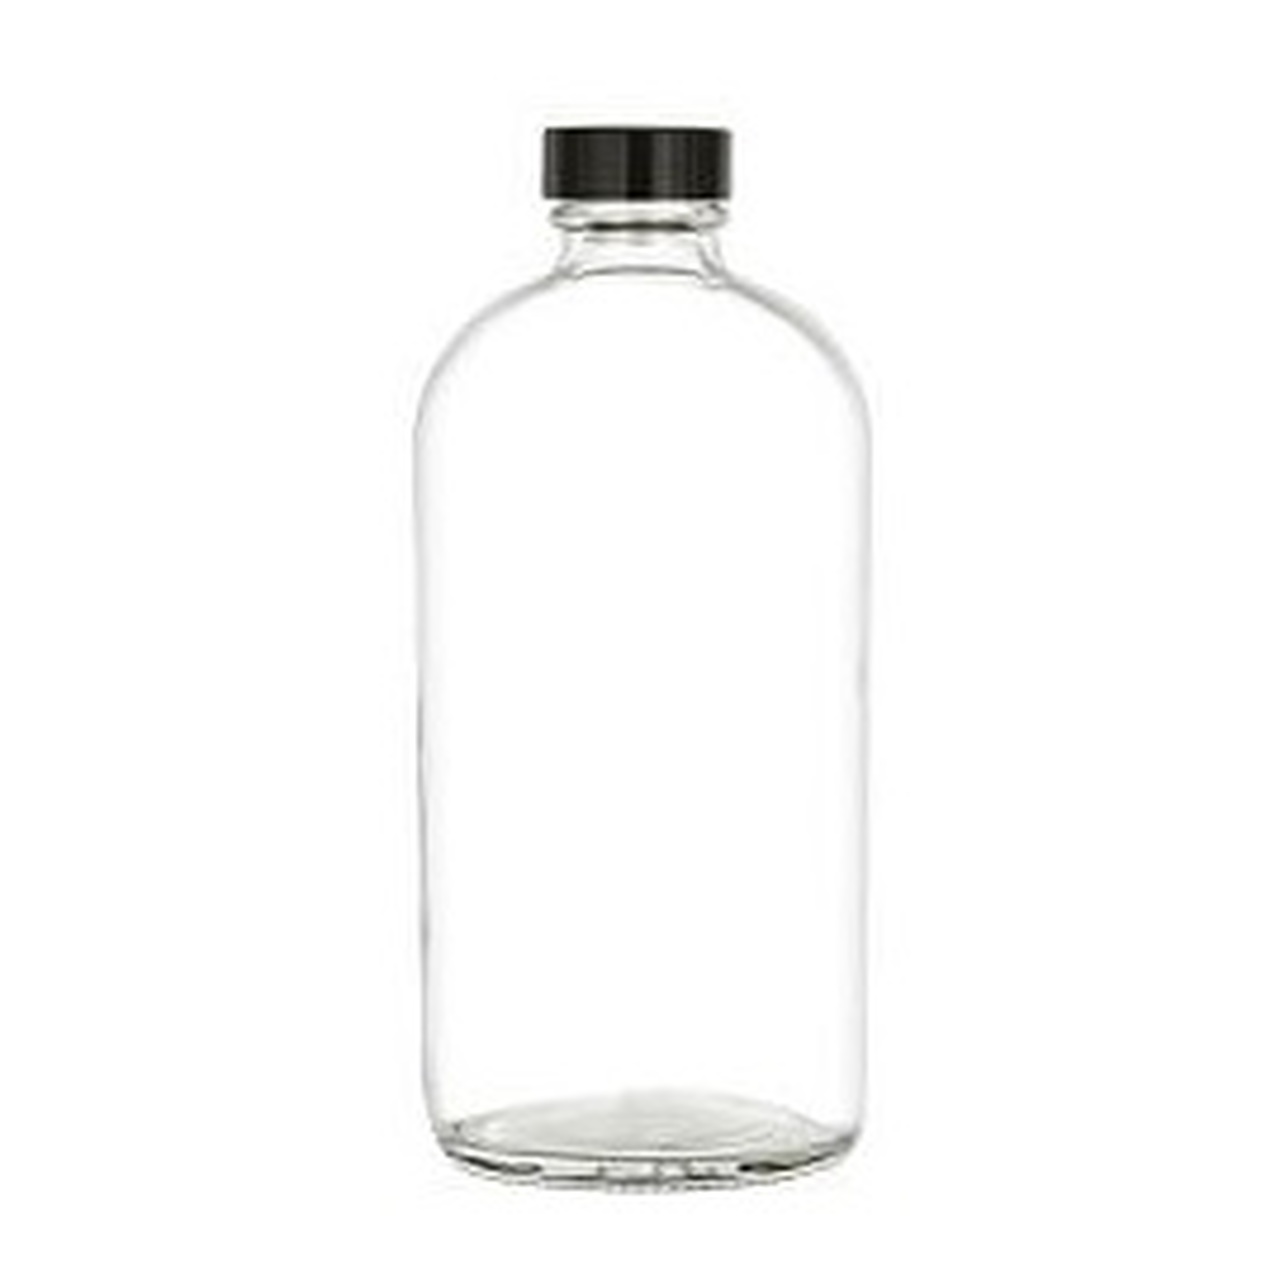 https://www.seekbottles.com/wp-content/uploads/2020/12/boston-round-glass-water-bottle.png